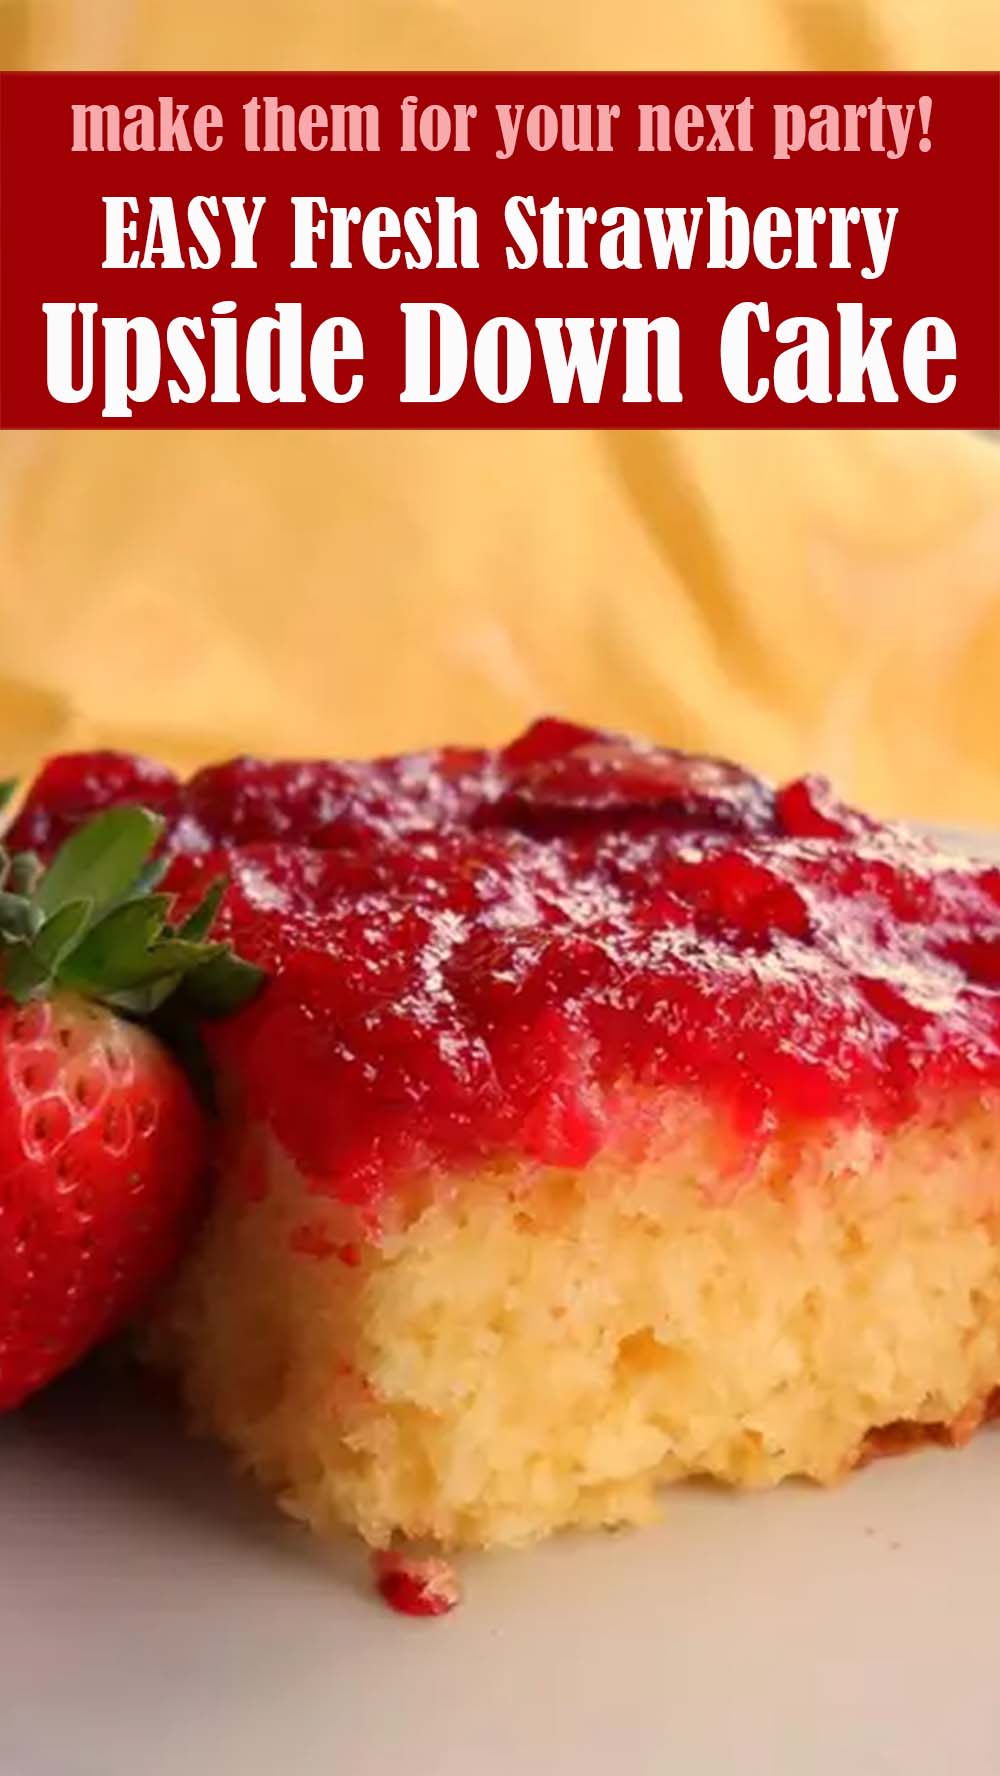 EASY Fresh Strawberry Upside Down Cake